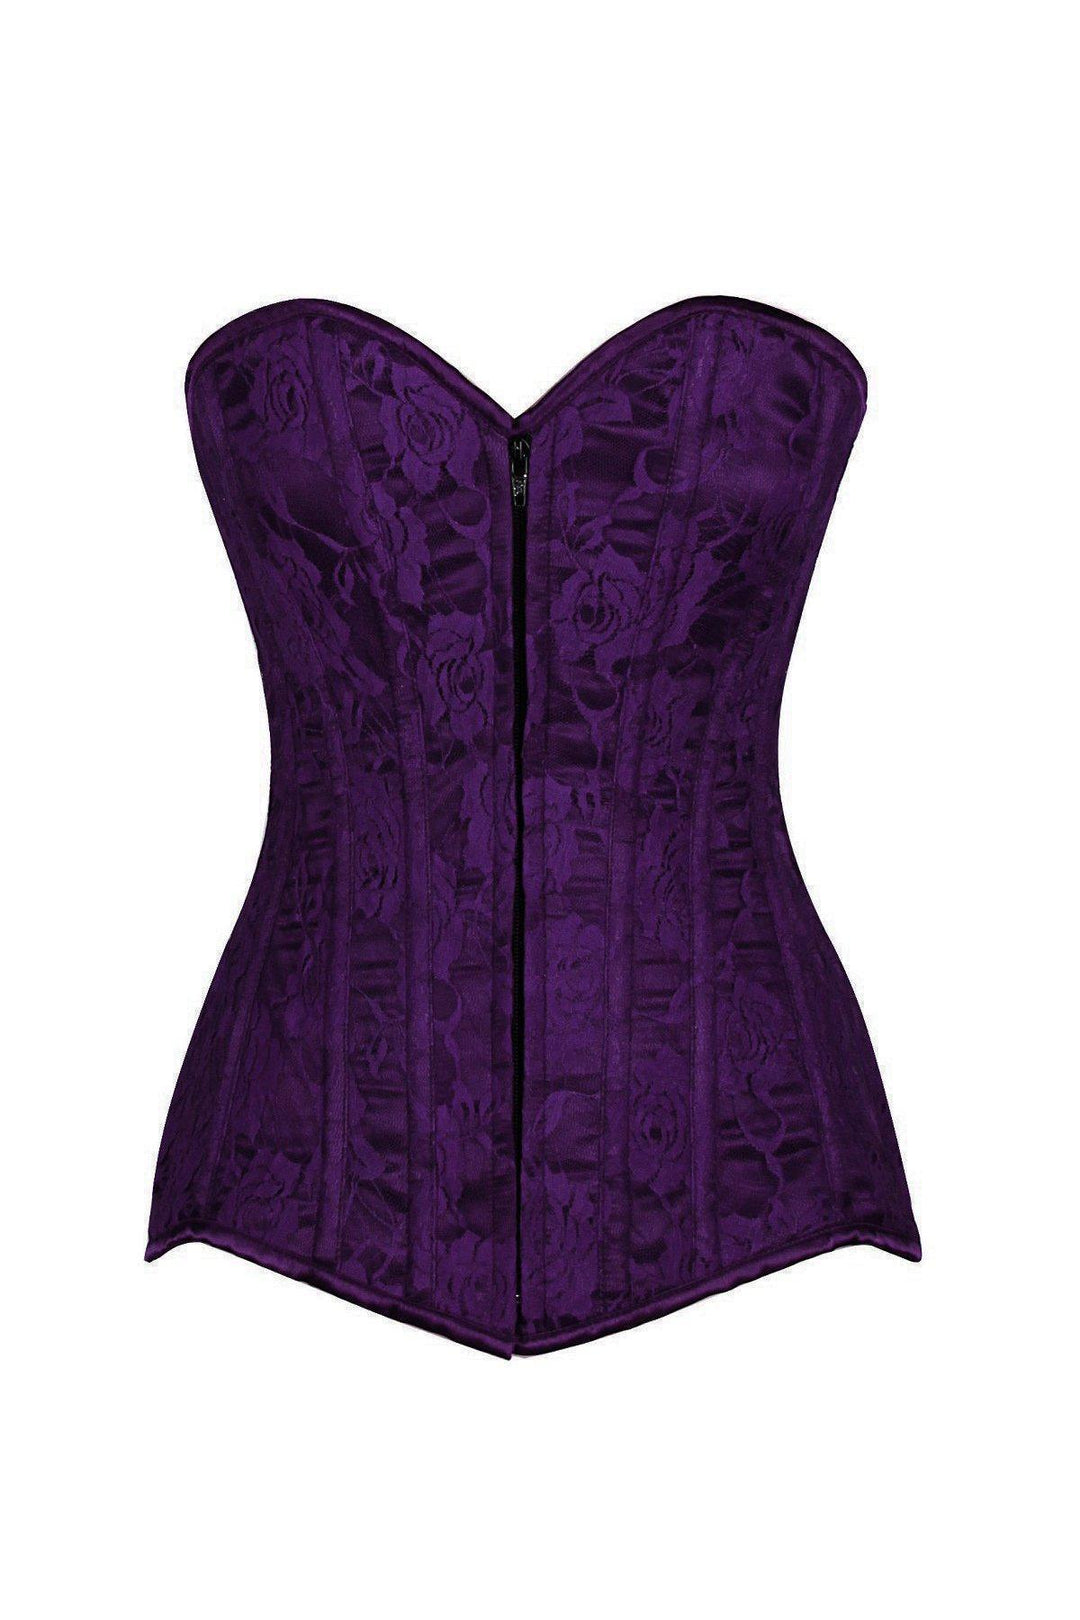 Lavish Dark Purple Lace Overbust Corset w/Zipper-Daisy Corsets-SEXYSHOES.COM